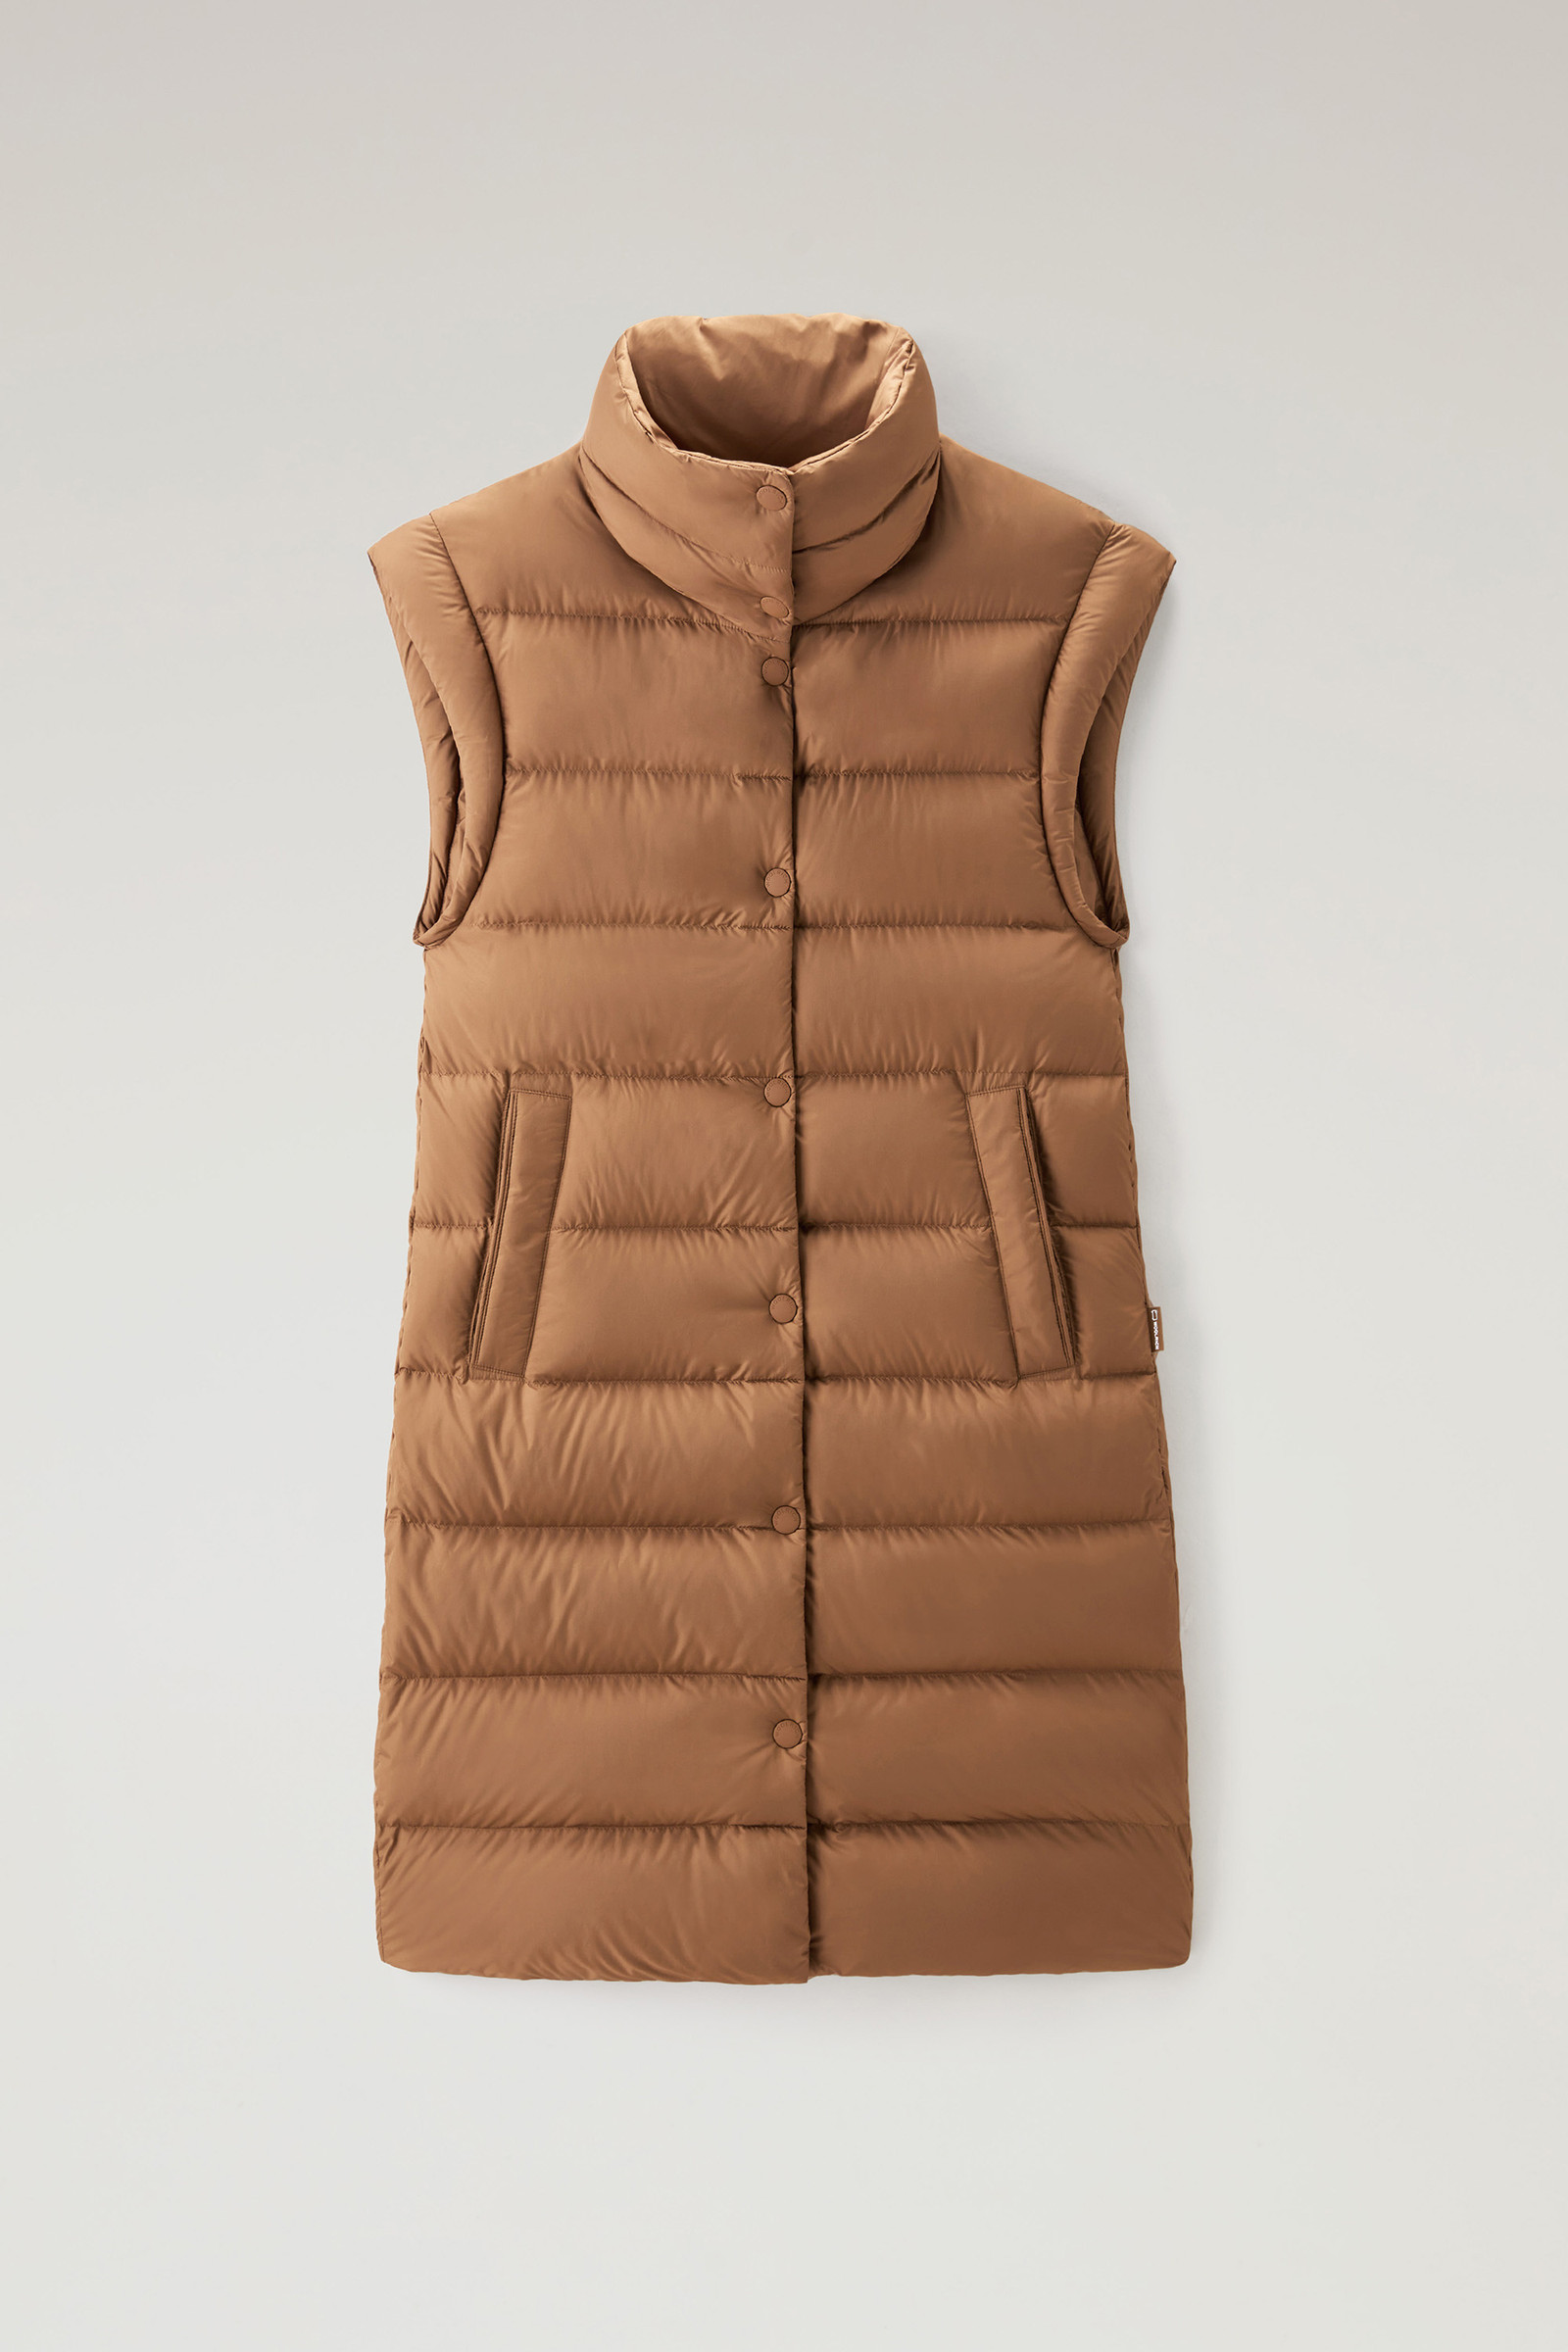 Outer Edge Women's Sleeveless Hooded Vest Coat Jacket Outwear Brown Sz L